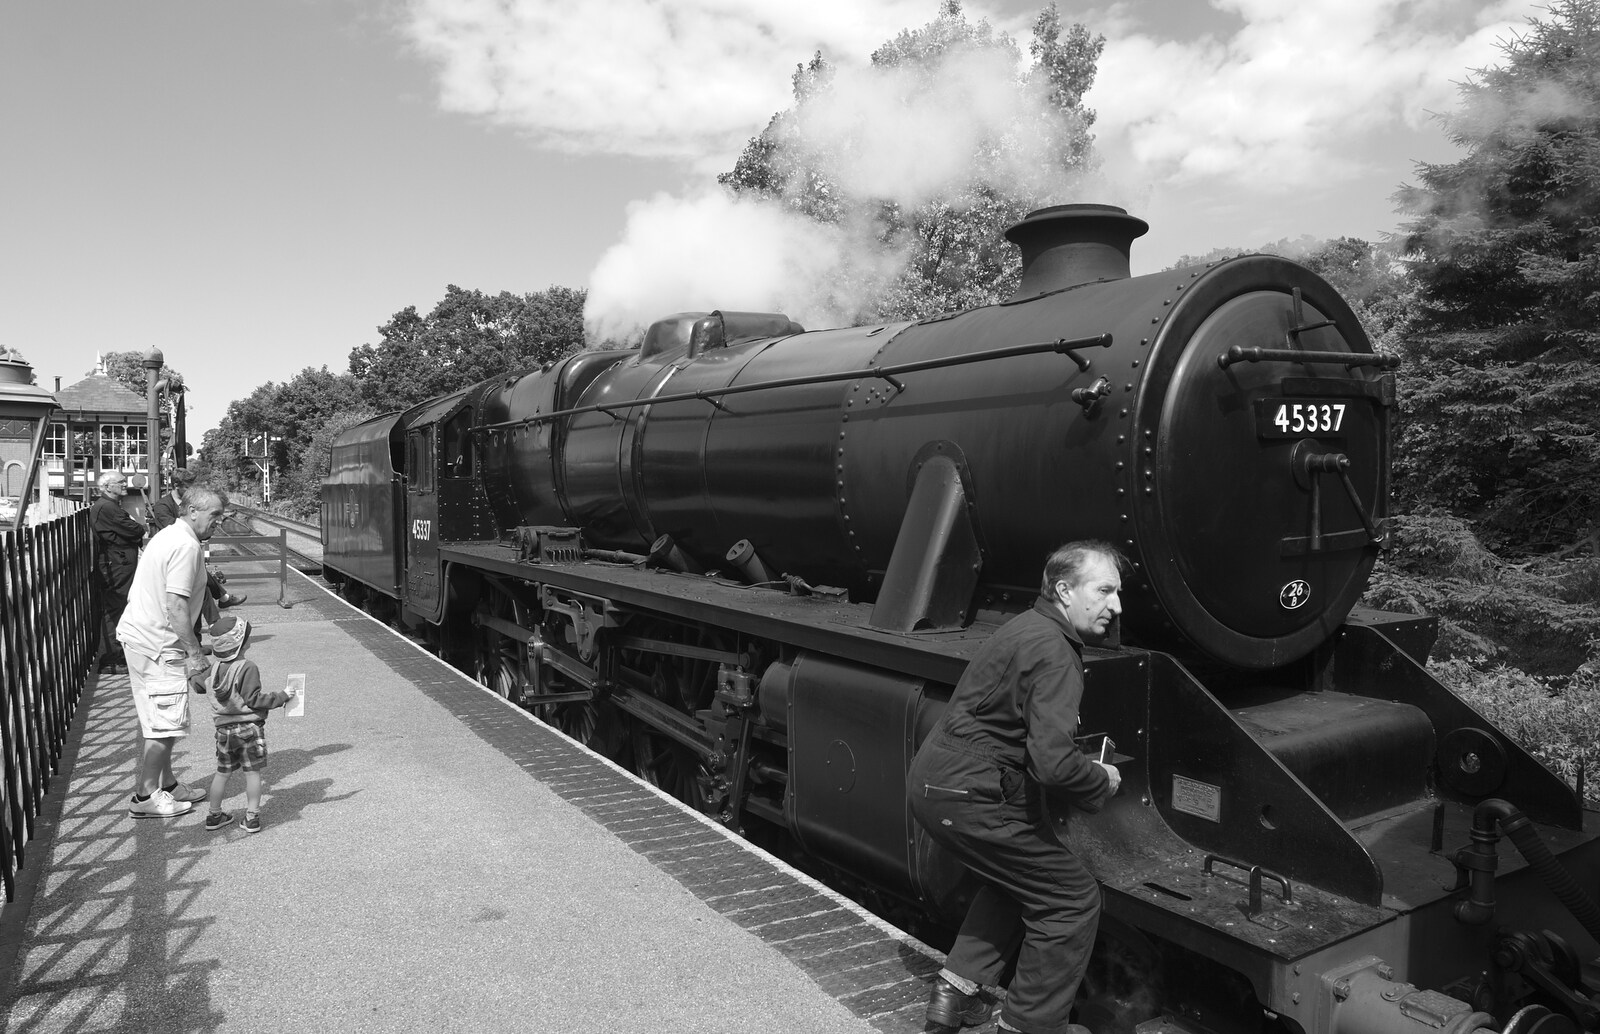 45337 at Weybourne from Sheringham Steam, Sheringham, North Norfolk - 31st July 2016